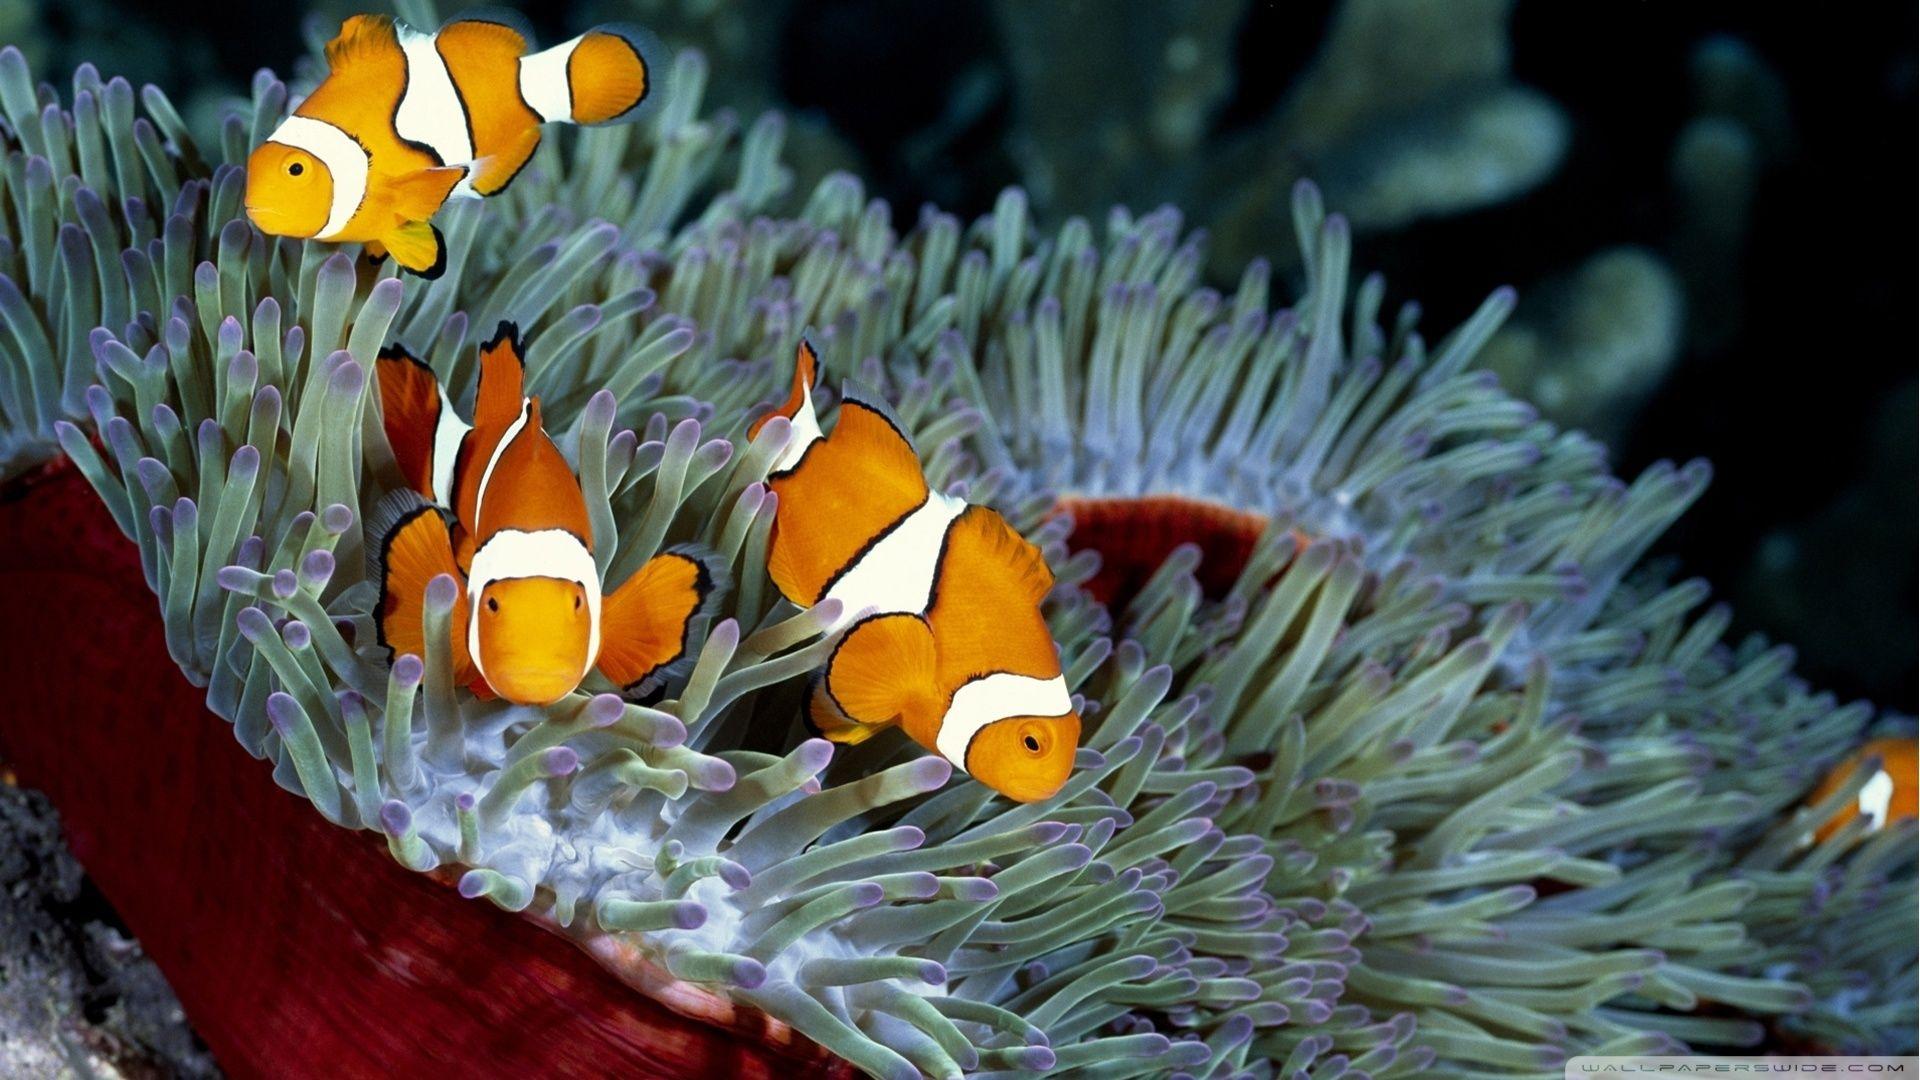 Black Clownfish Anemon HD Wallpaper, Background Image